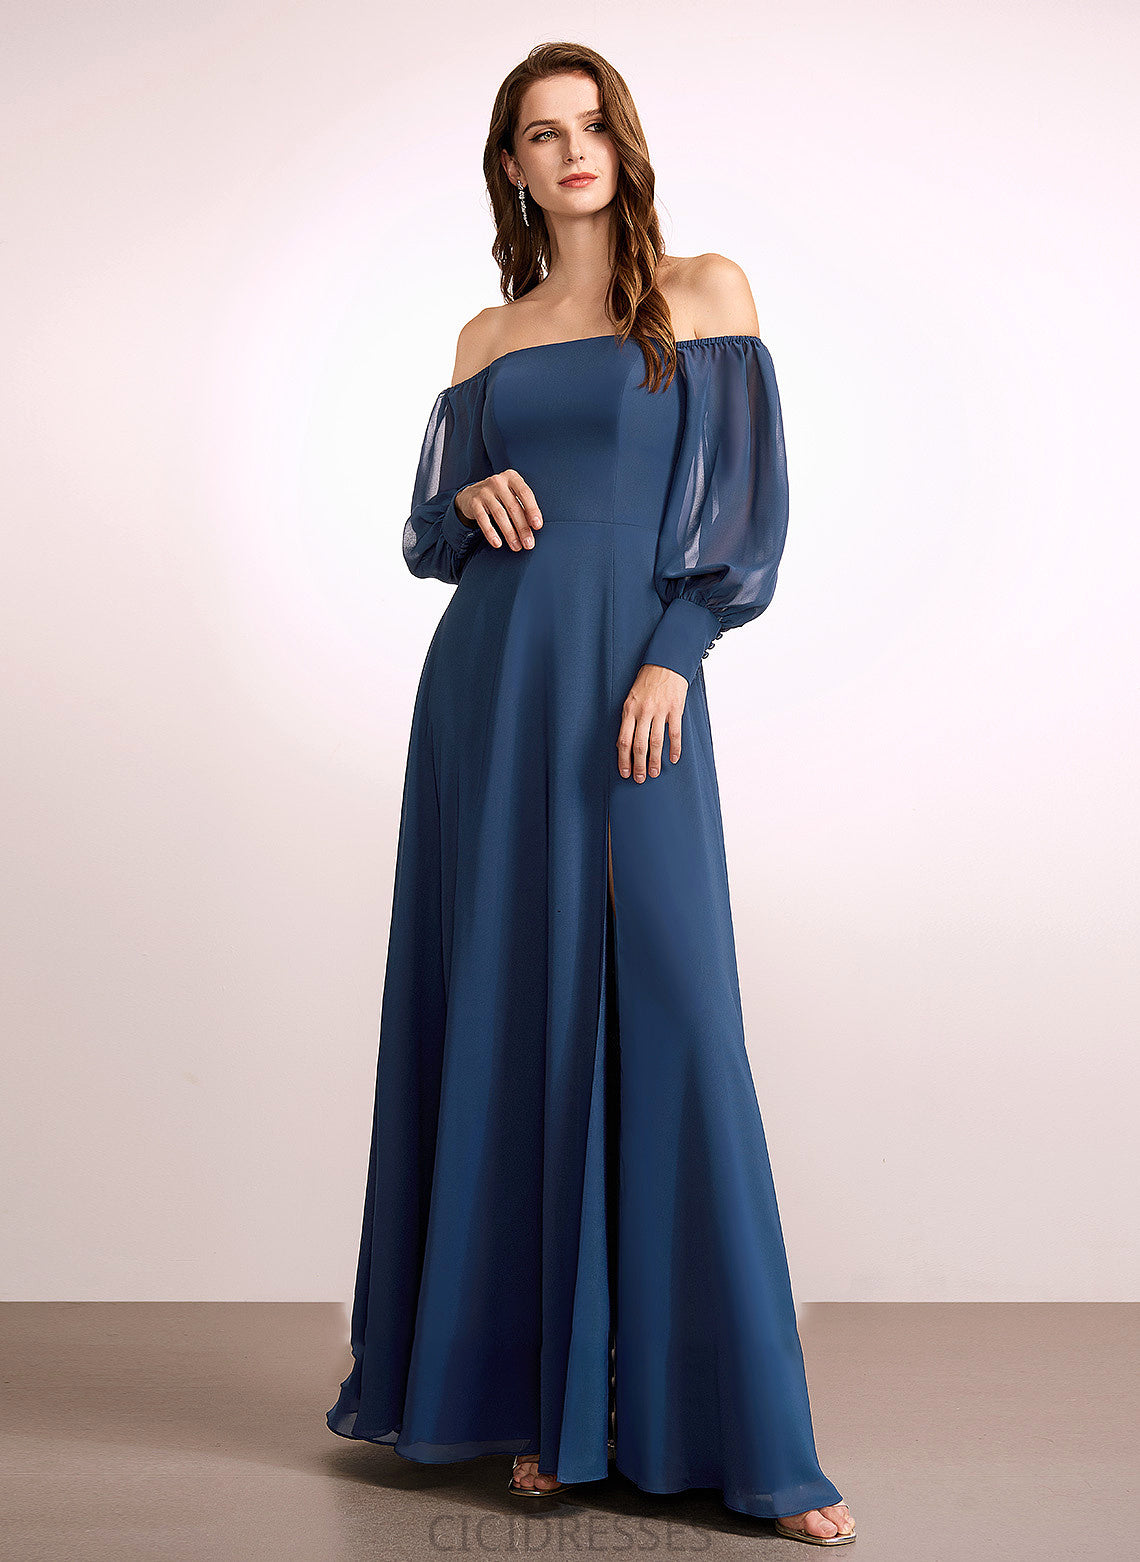 Embellishment Fabric Silhouette Neckline A-Line SplitFront Length Off-the-Shoulder Floor-Length Sierra Scoop A-Line/Princess Bridesmaid Dresses